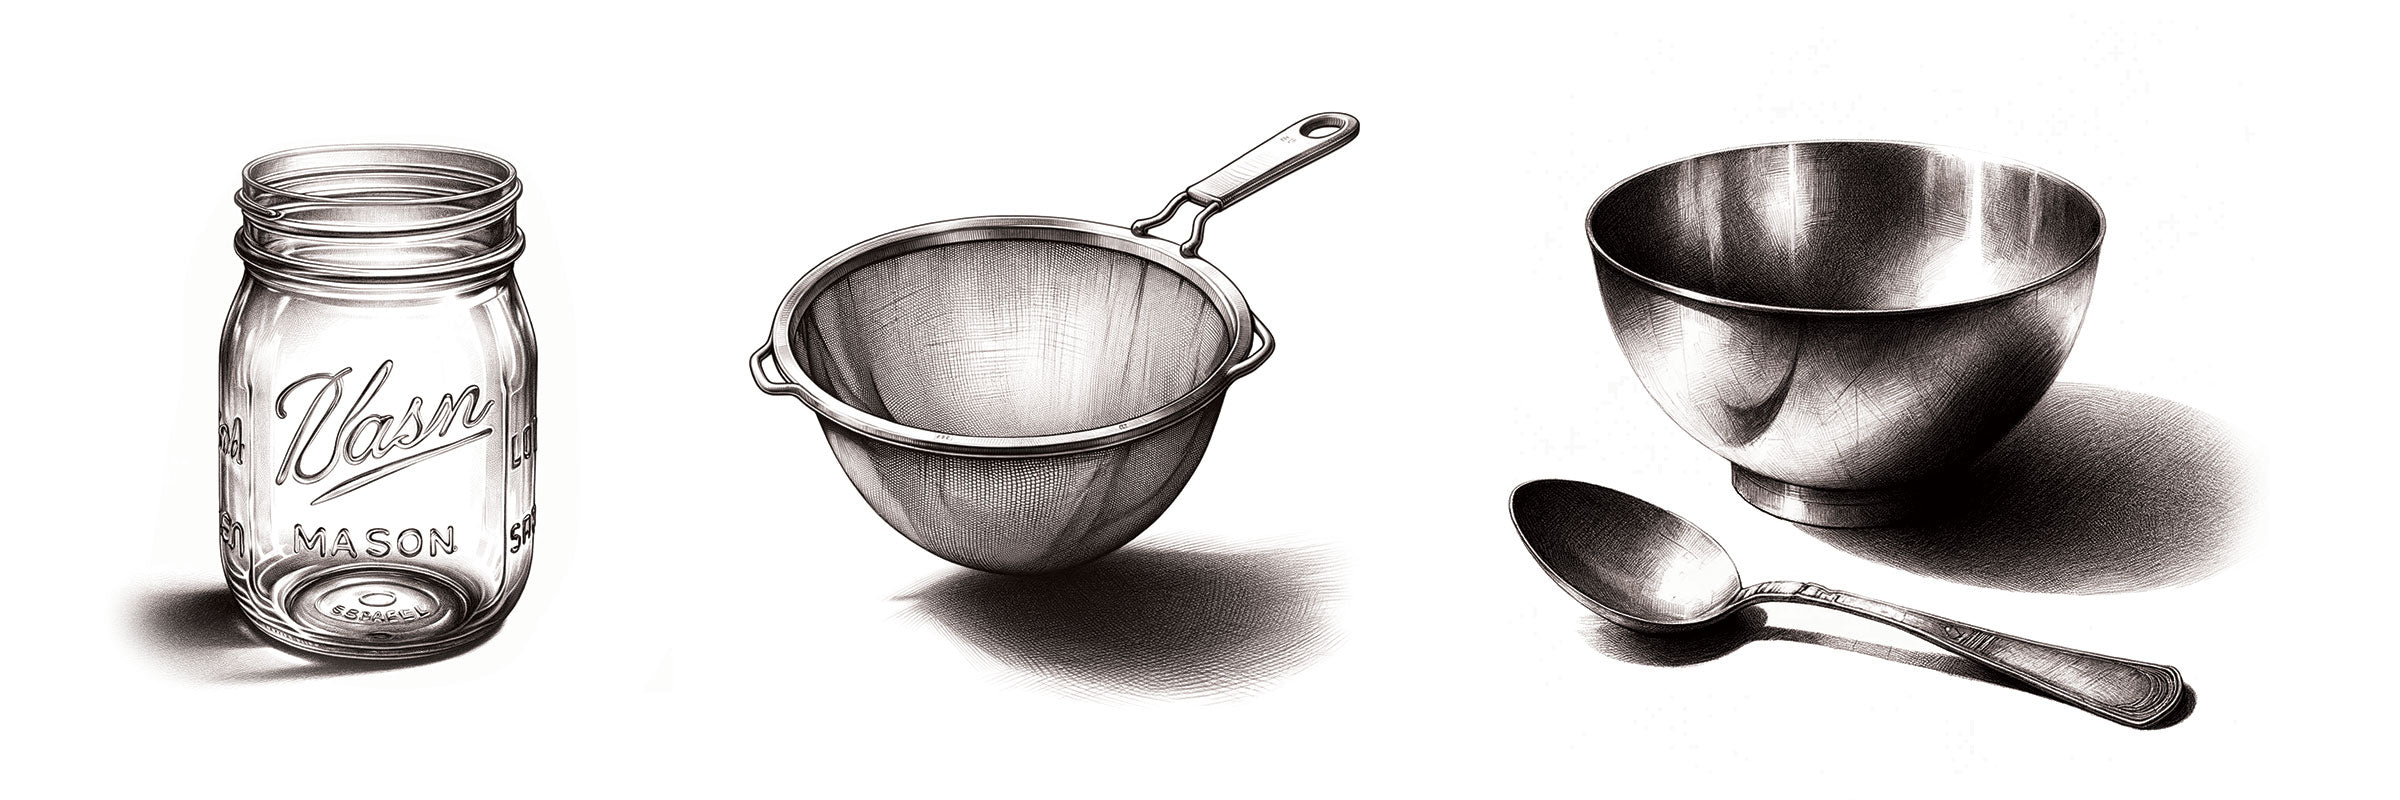 Tincture equipment - Mason jar, mesh strainer, stainless bowl, spoon